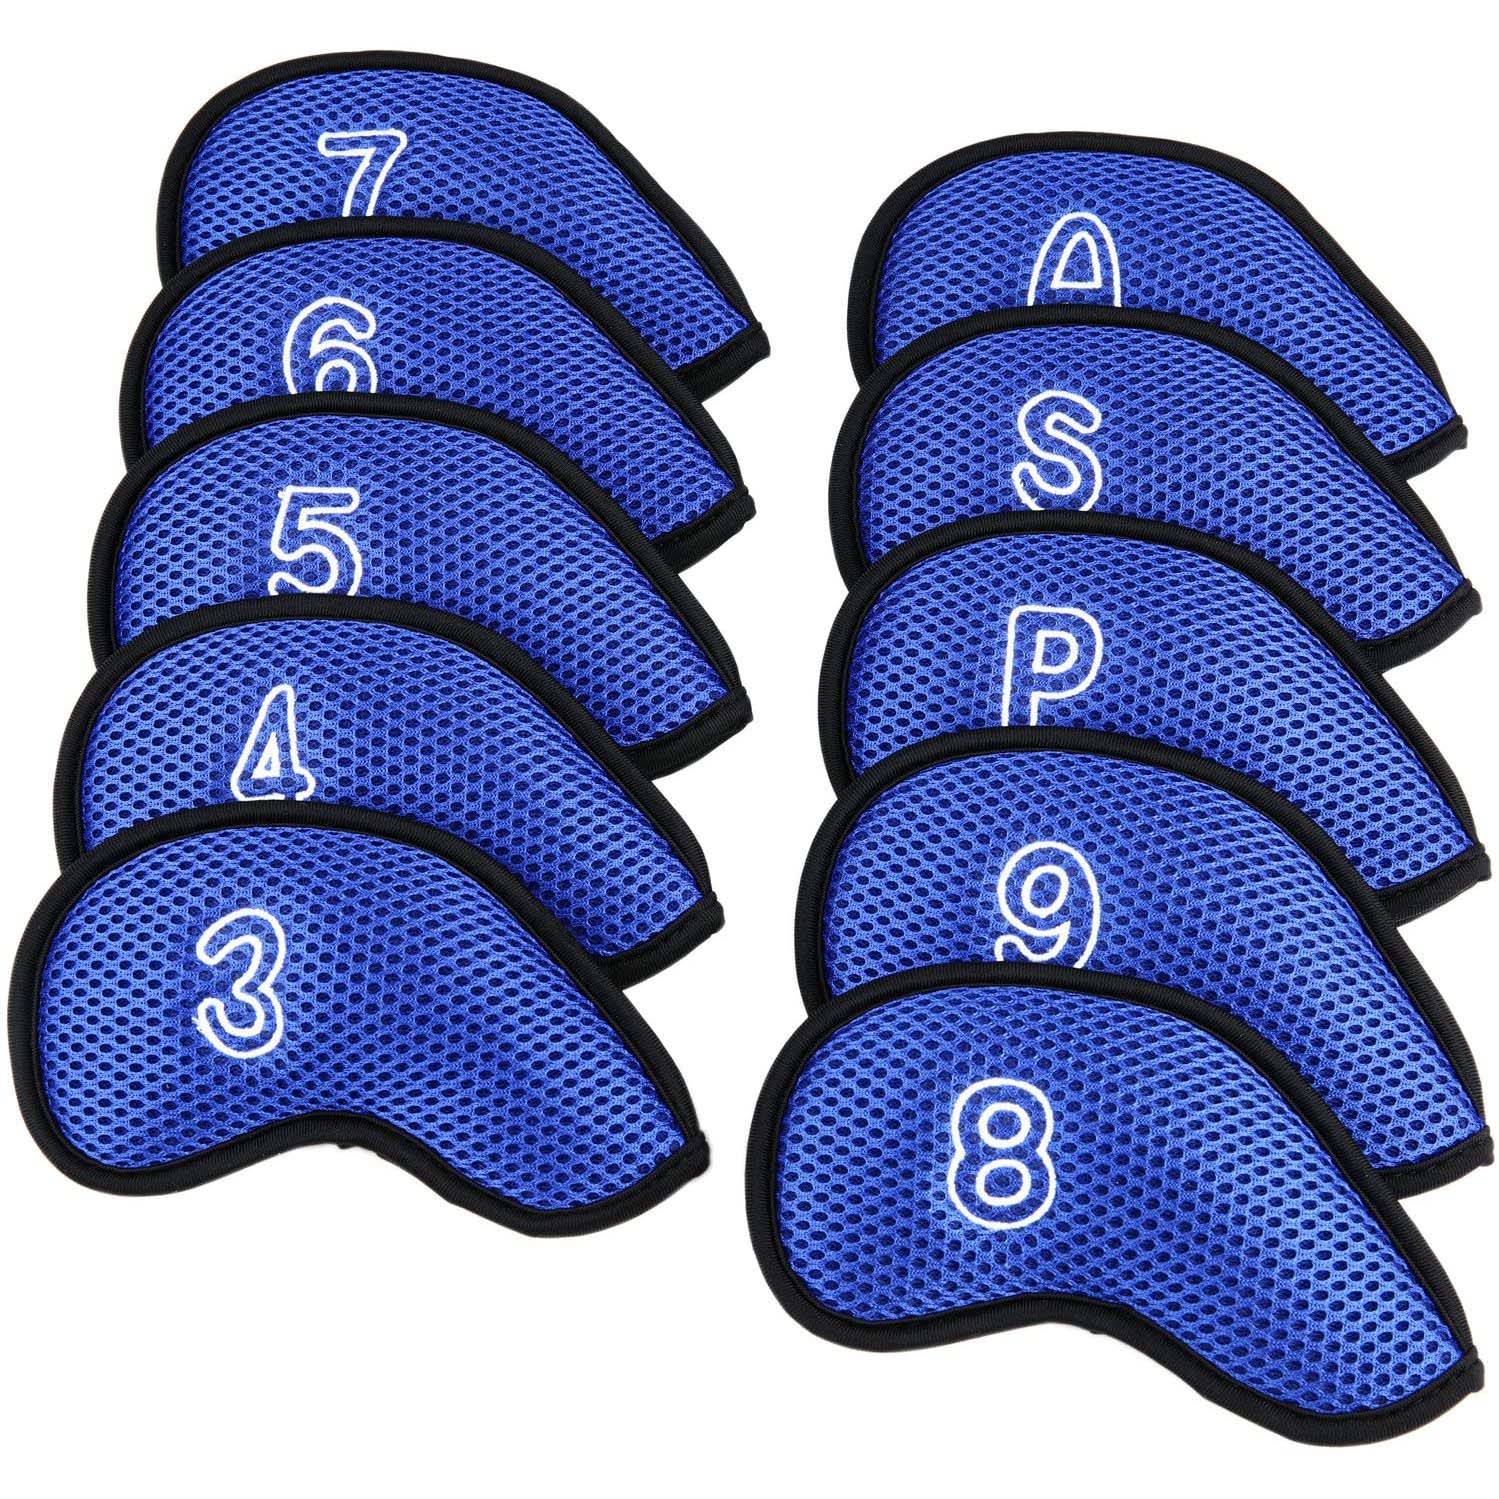 SCIROCC 10Pcs กีฬา3,4,5,6,7,8,9,P,S,A จำนวนออกแบบกรณี Protector ถุงใส่หัวไม้กอล์ฟฝาครอบป้องกัน Headcovers กอล์ฟกอล์ฟอุปกรณ์เสริมกอล์ฟครอบคลุมเหล็กชุดถุงคลุมหัวไม้กอล์ฟ